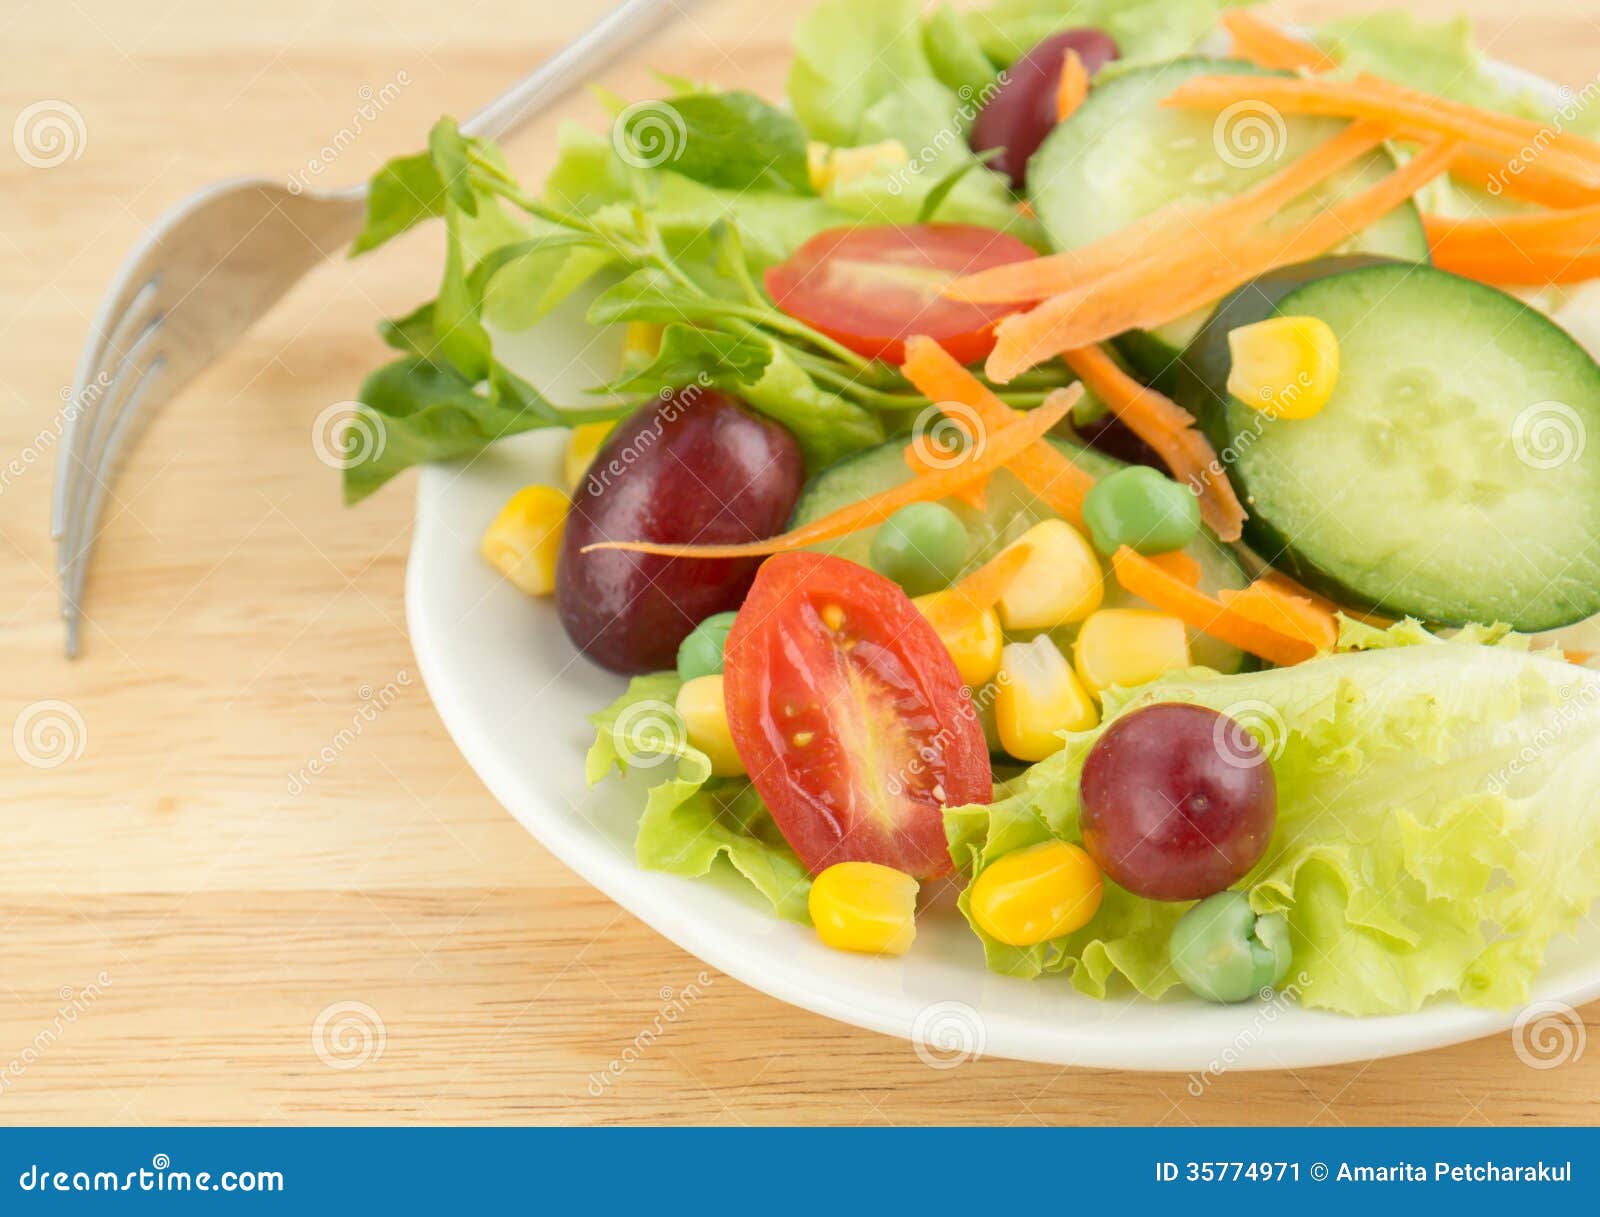 Fresh Vegetable Salad on White Plate Stock Image - Image of organic ...